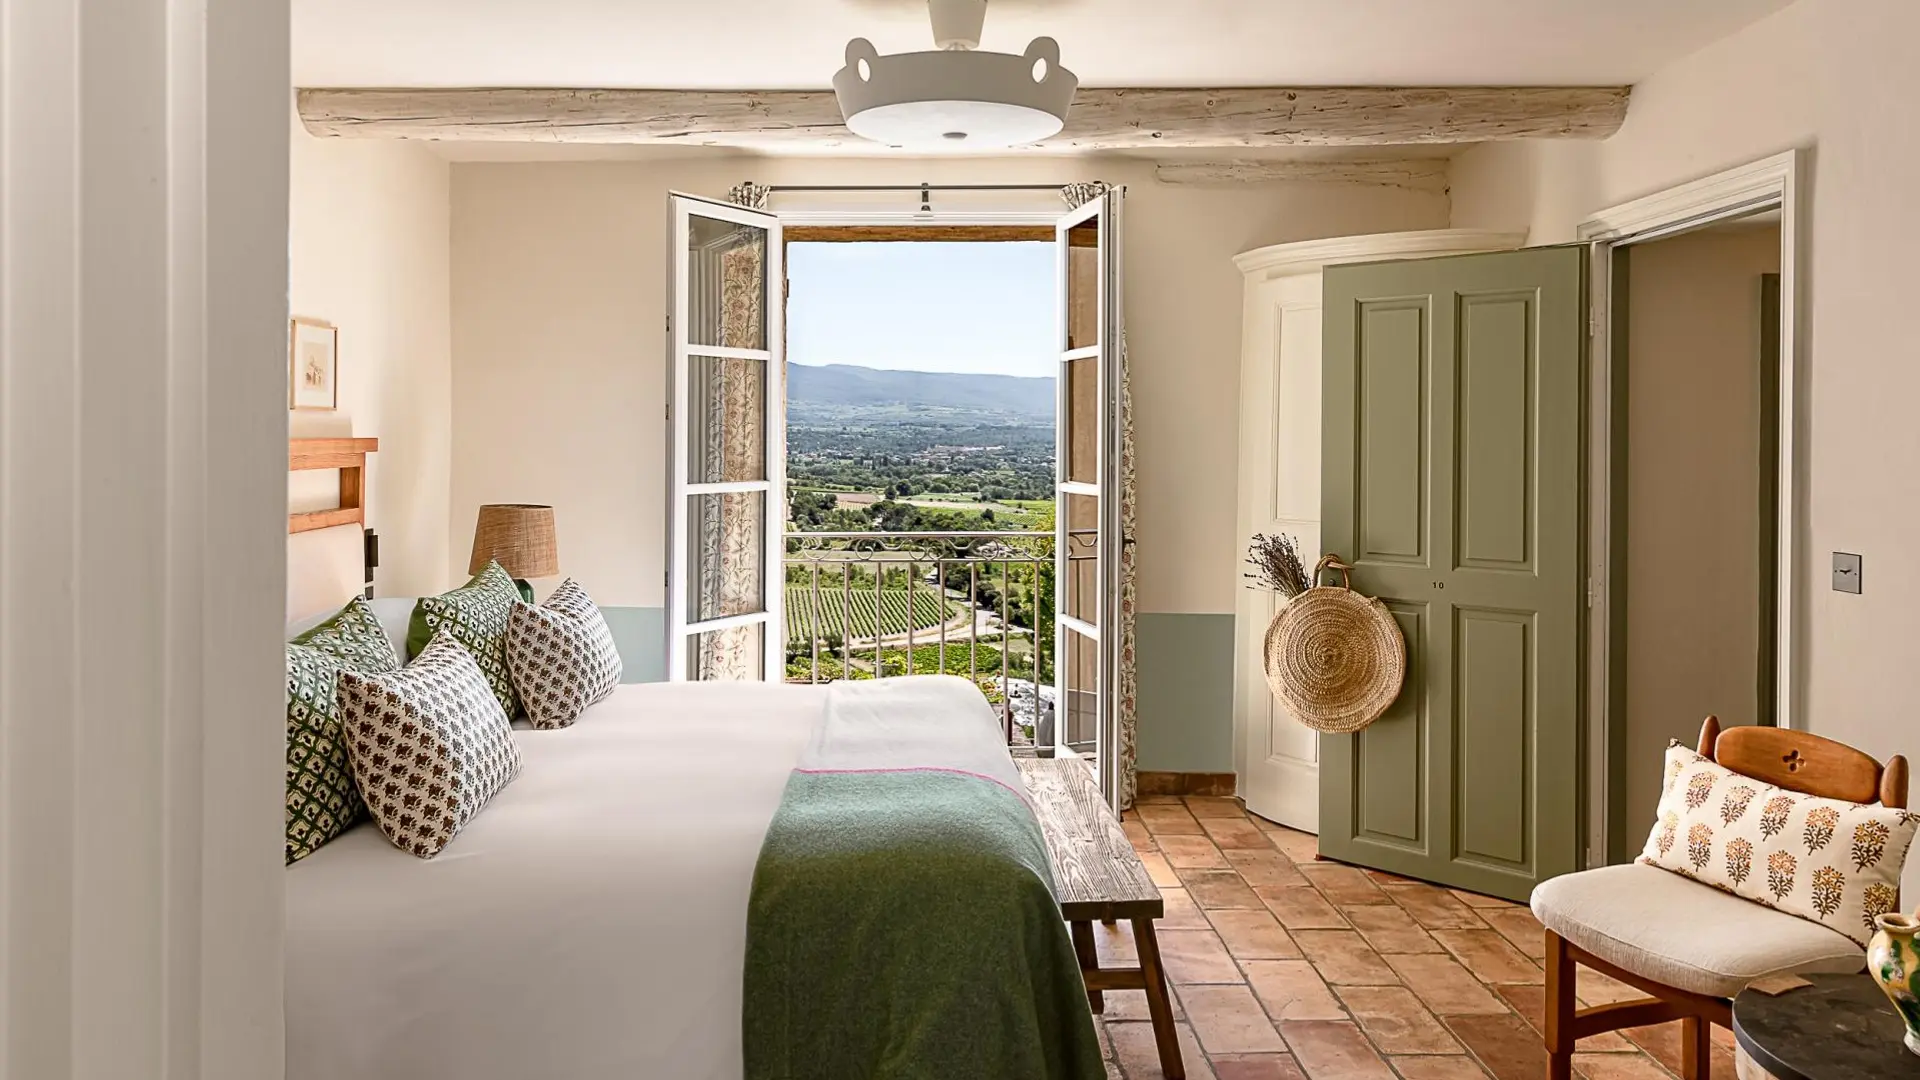 Hotel review Accommodation' - Hôtel Crillon le Brave - Provence - 9